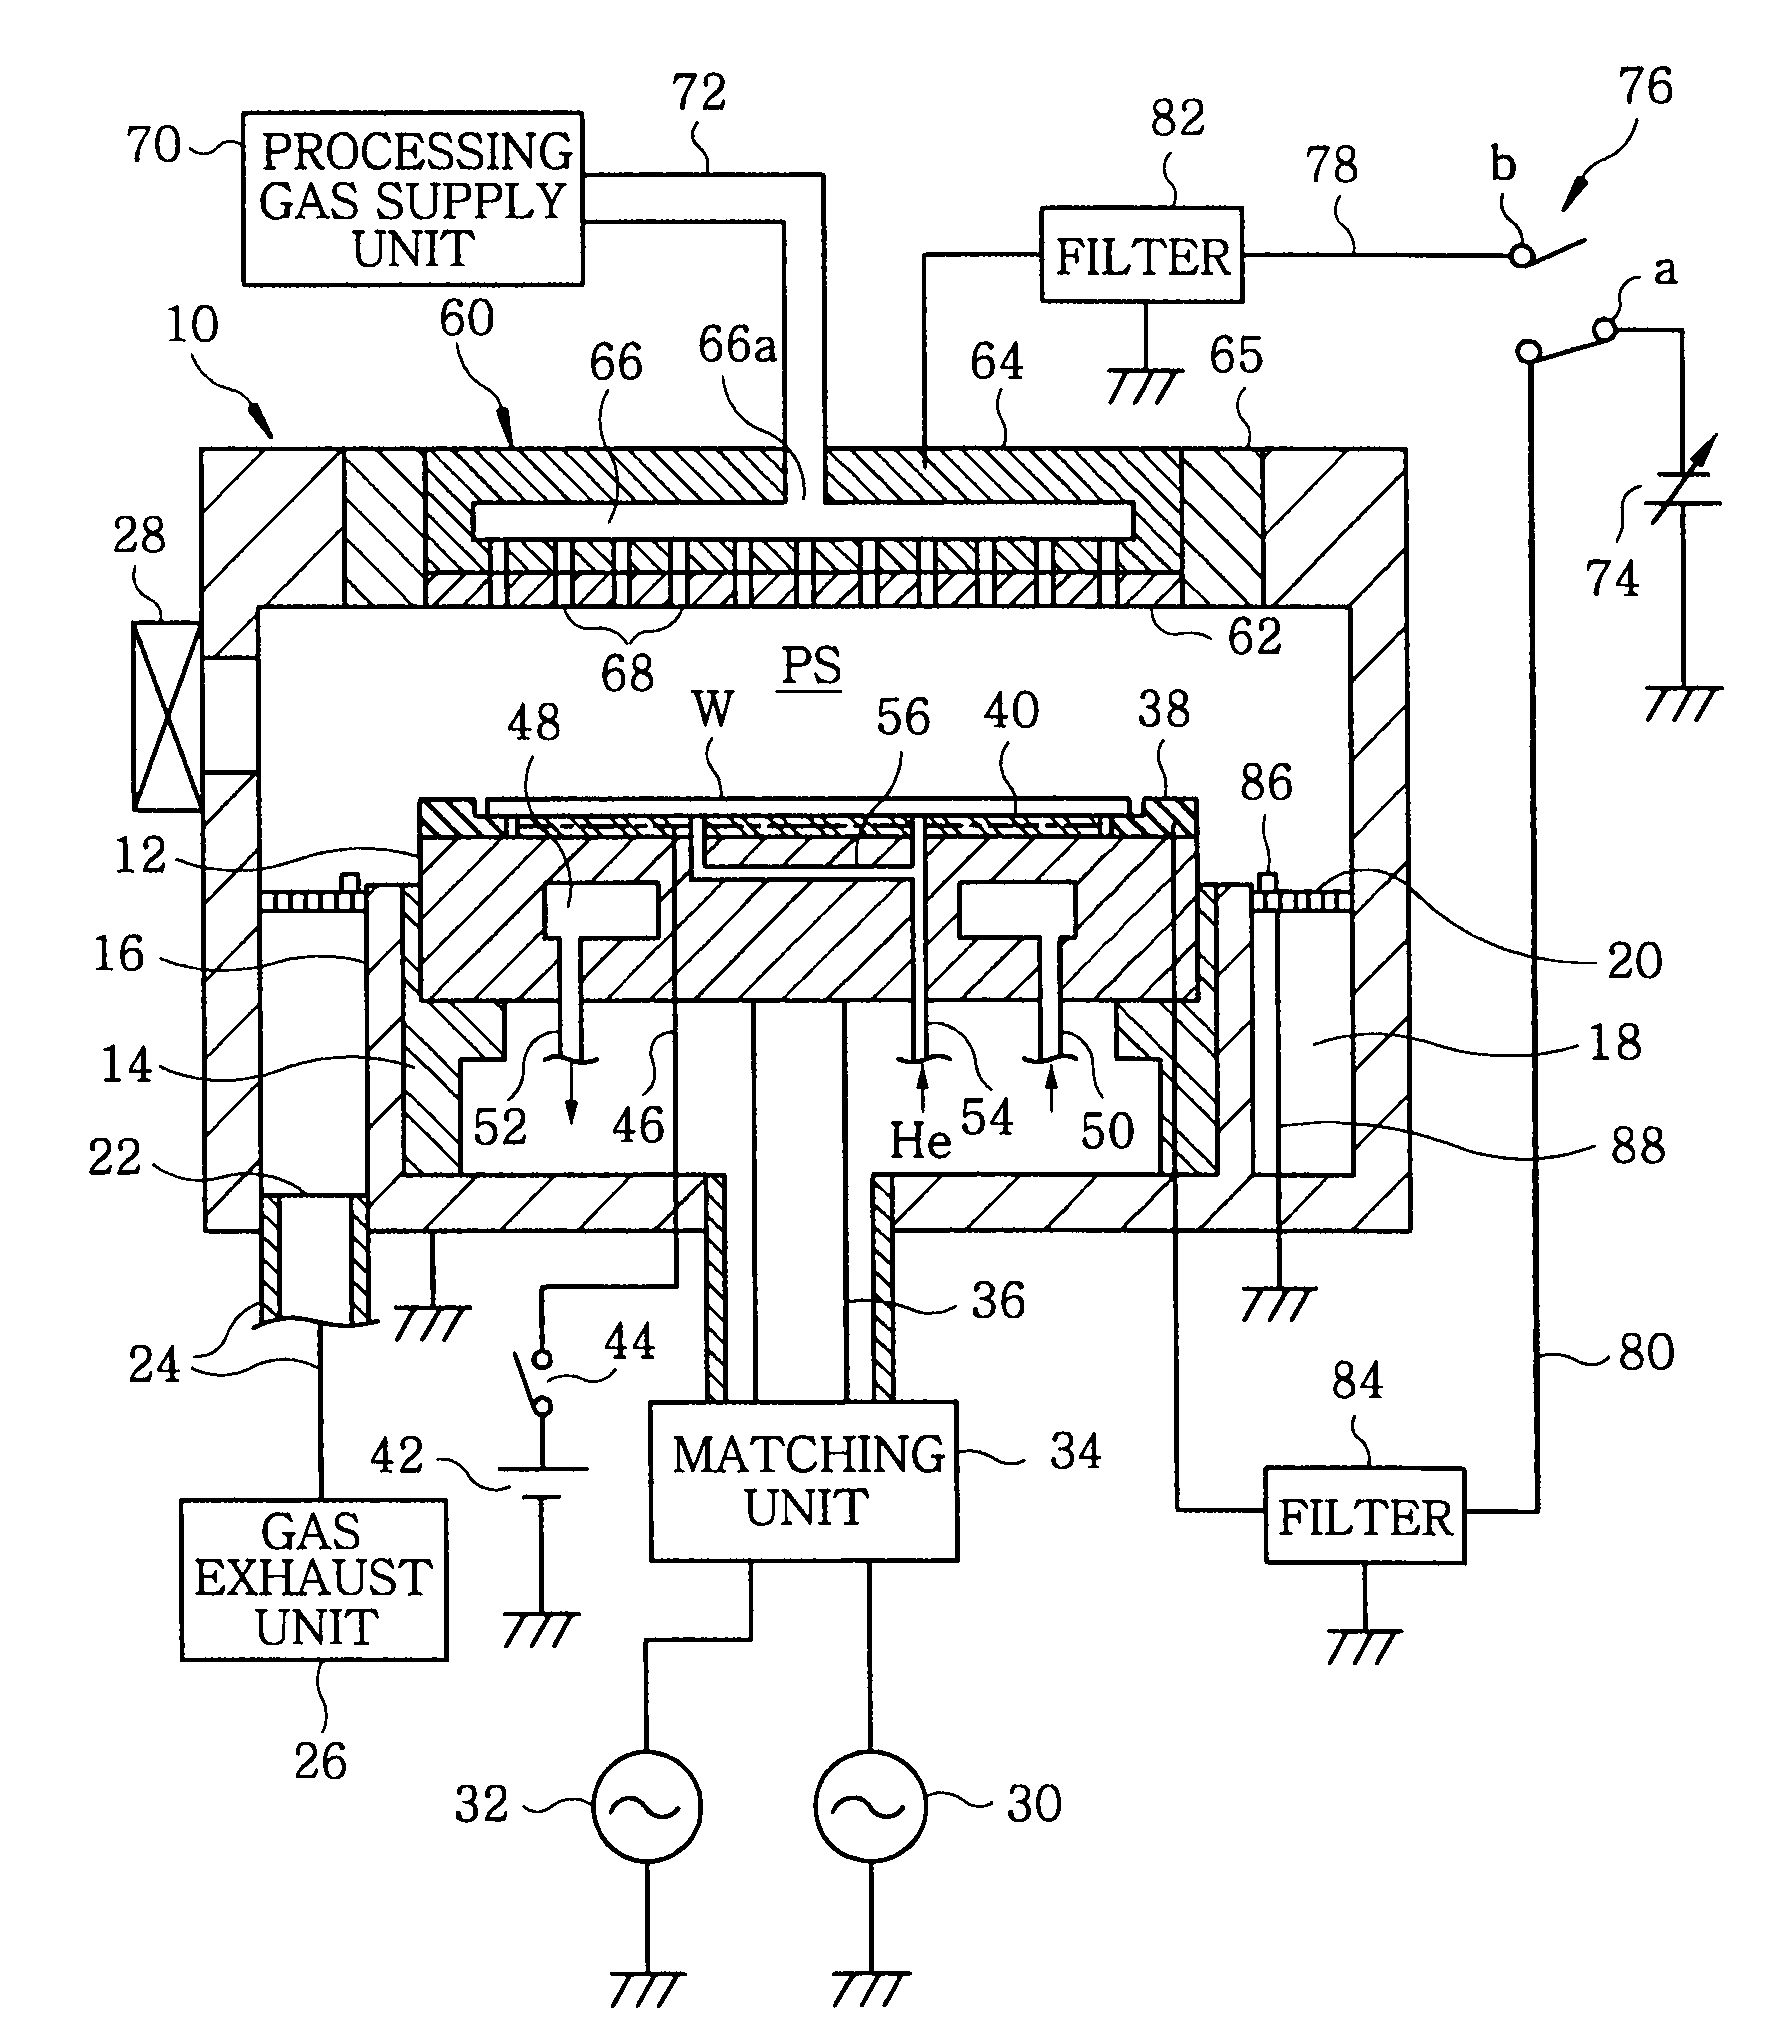 Plasma etching apparatus and method, and computer-readable storage medium